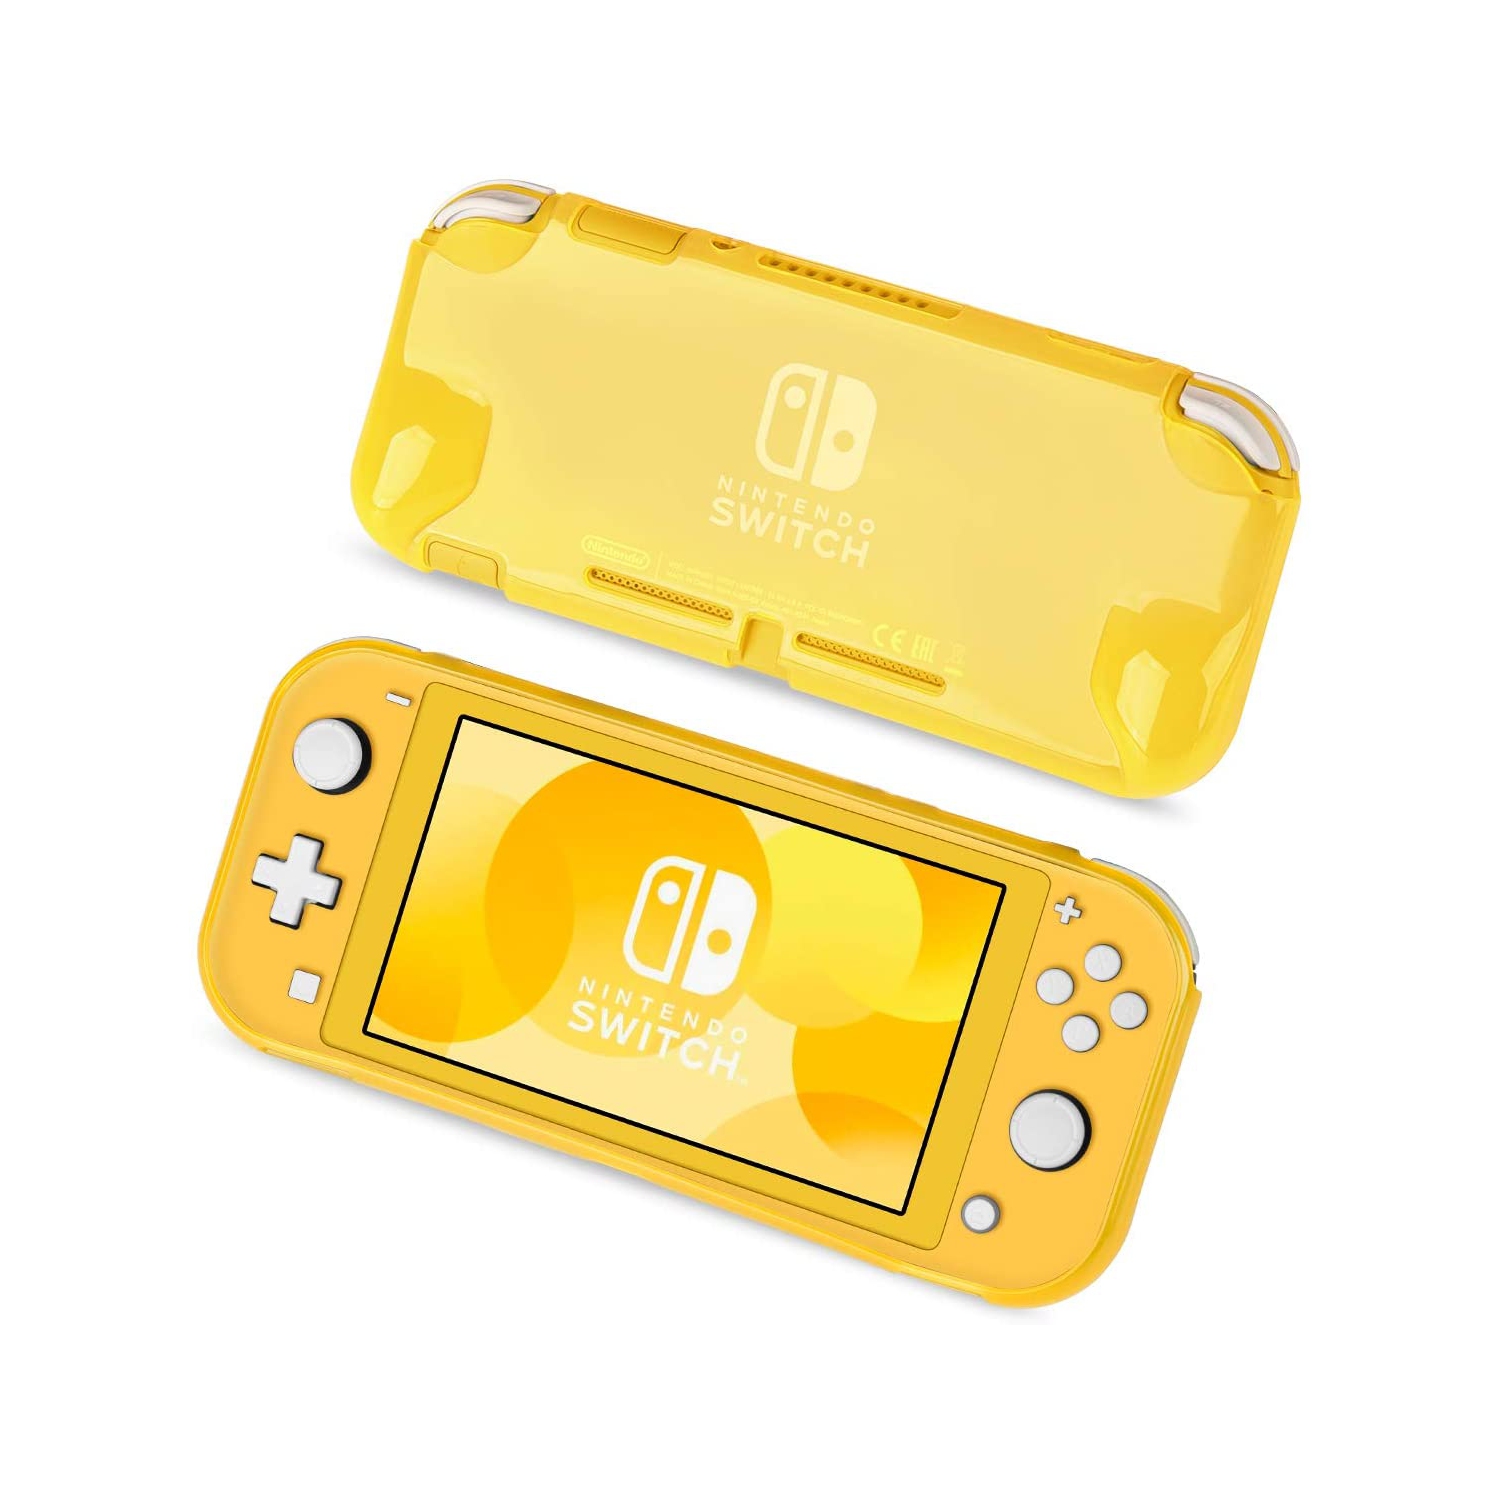 TPU Nintendo Switch Protective Case,Anti-Scratch for Nintendo Switch Lite Console